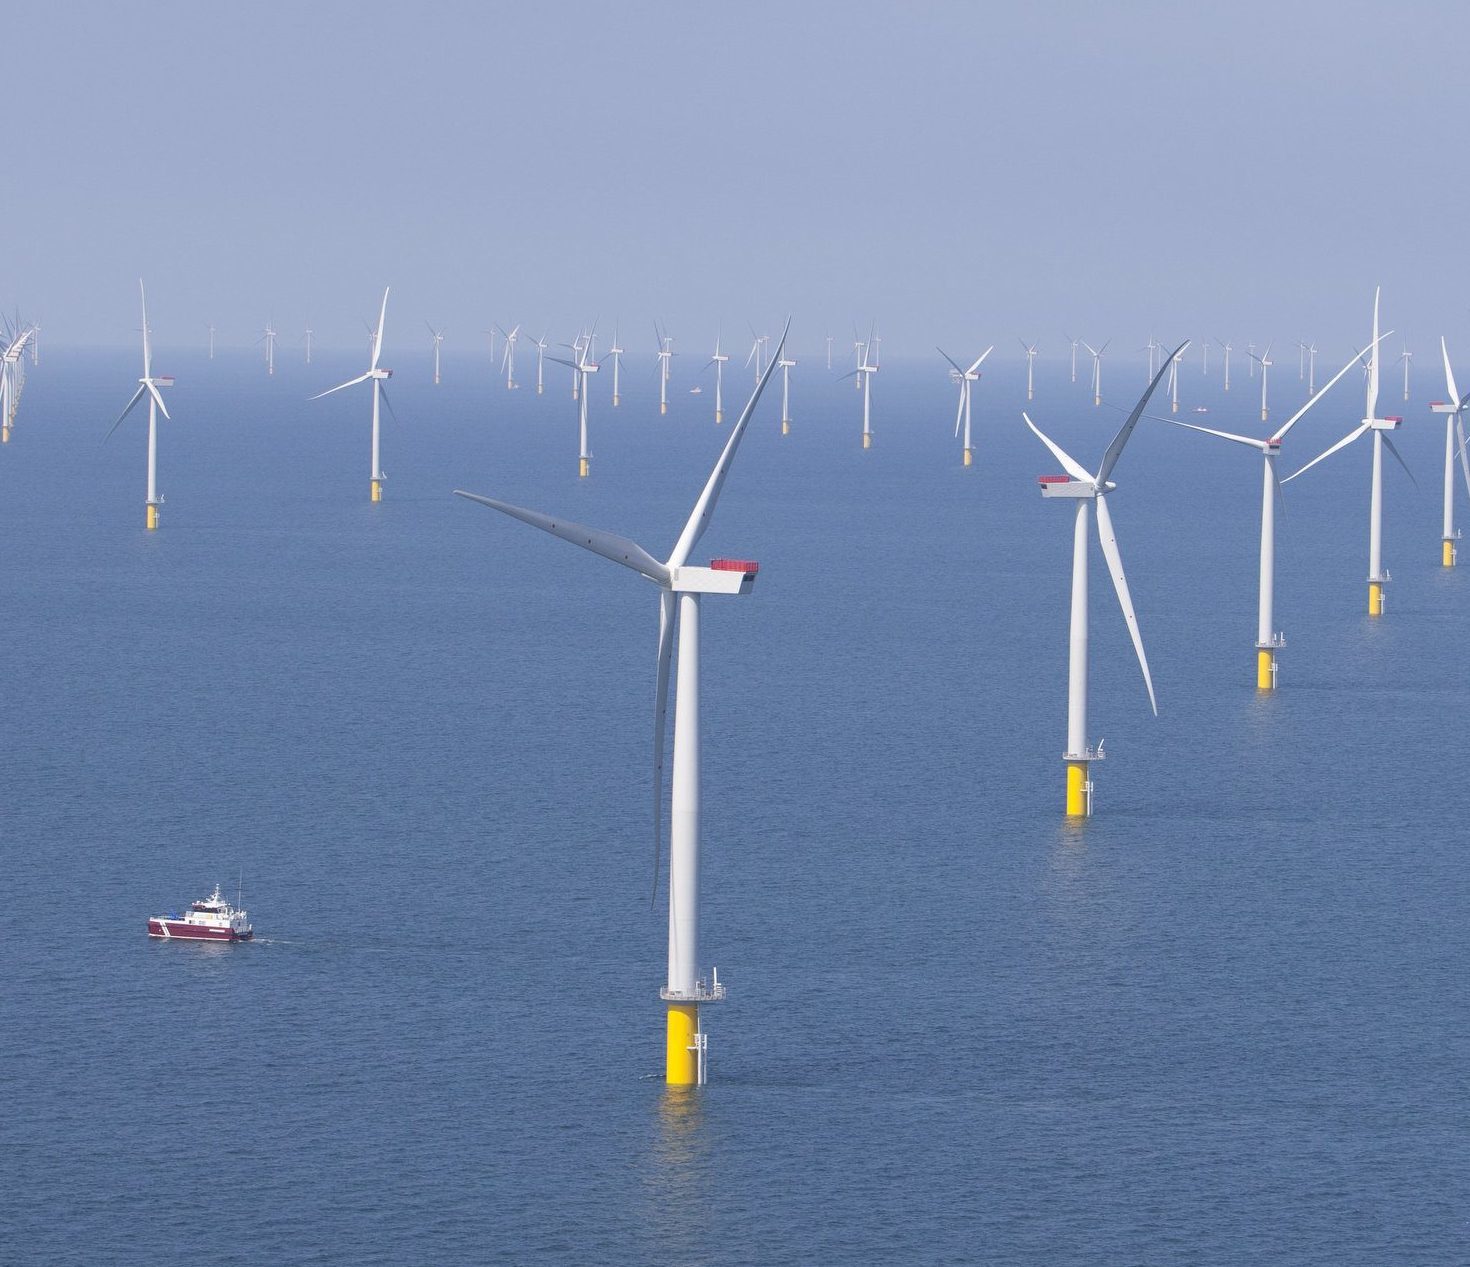 DeepOcean secures 150 UK jobs with windfarm contract - Energy Voice